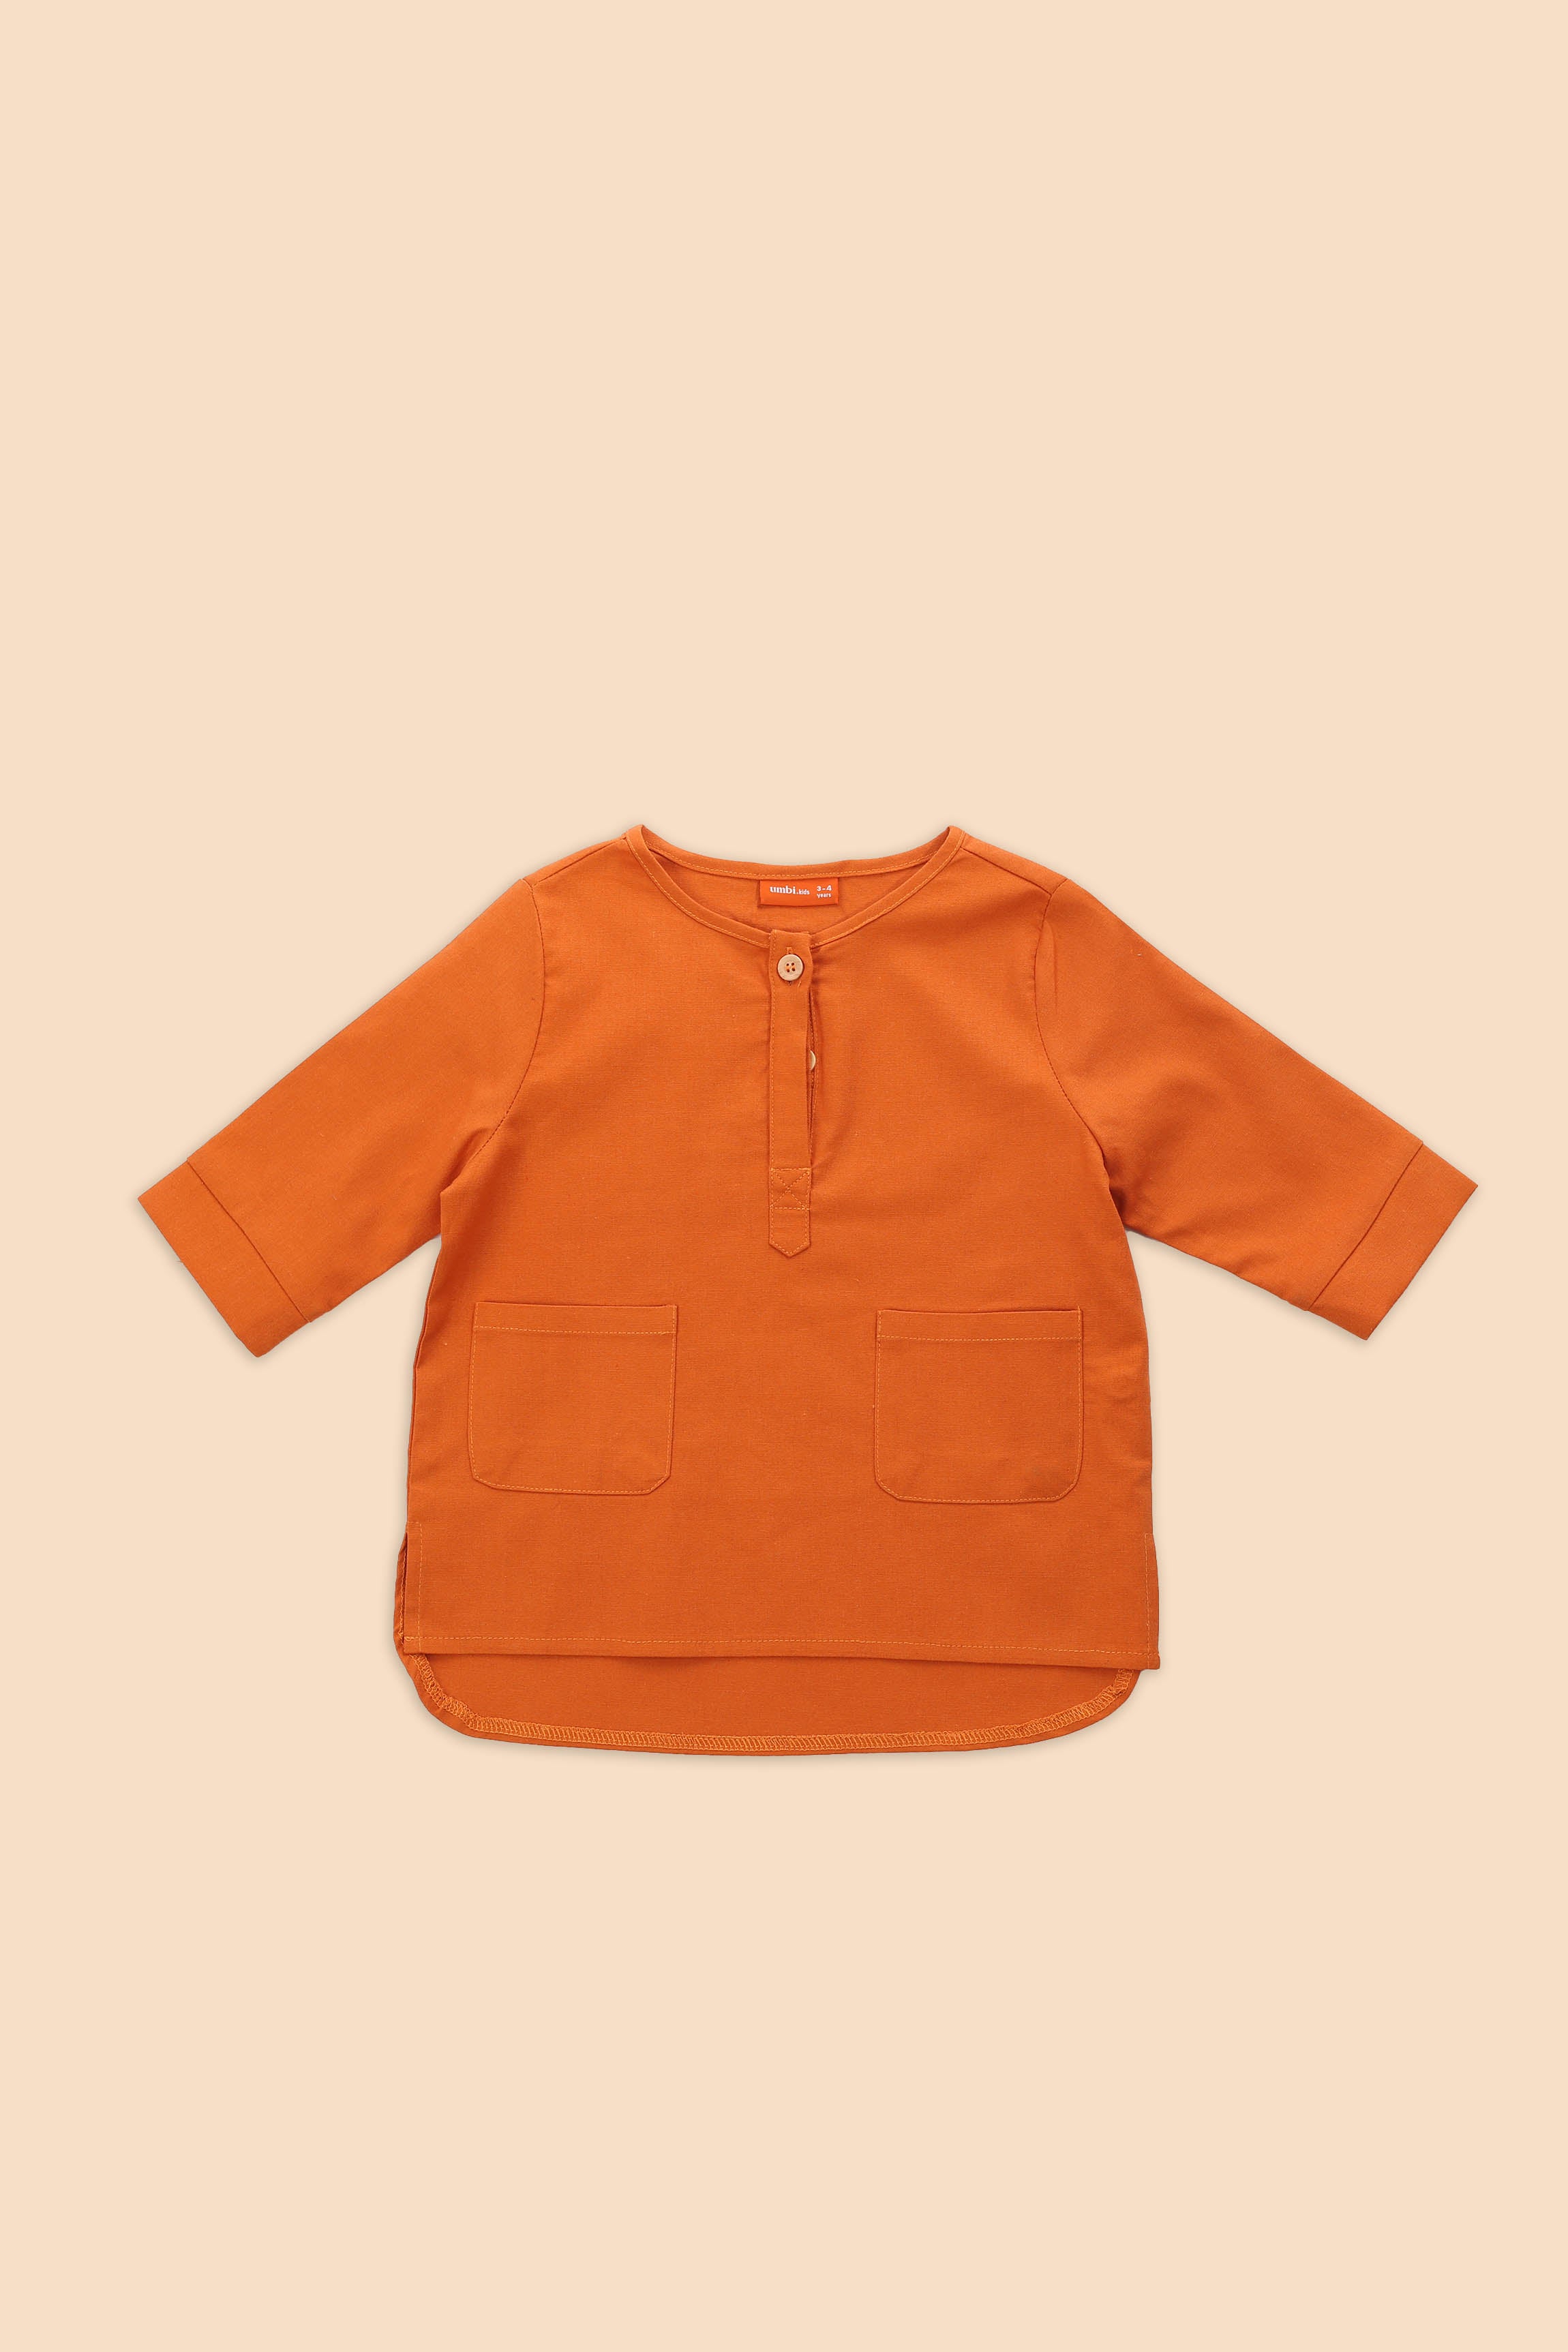 The Matahari Pair Pockets Kurta Top Orange